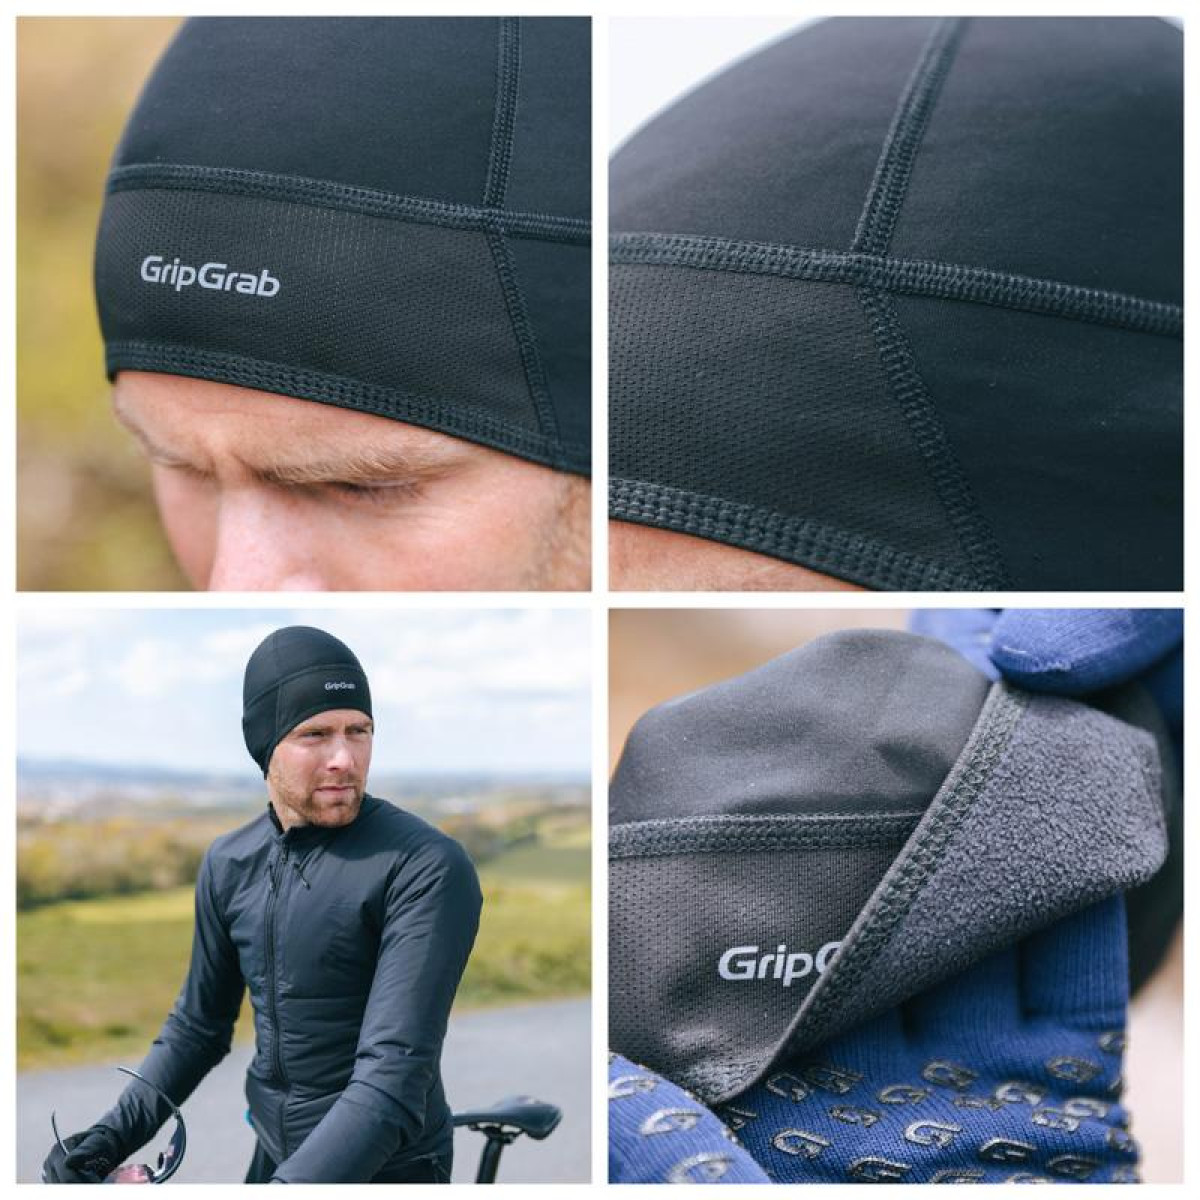 GripGrab Thermo Windproof Winter kepurė / Black